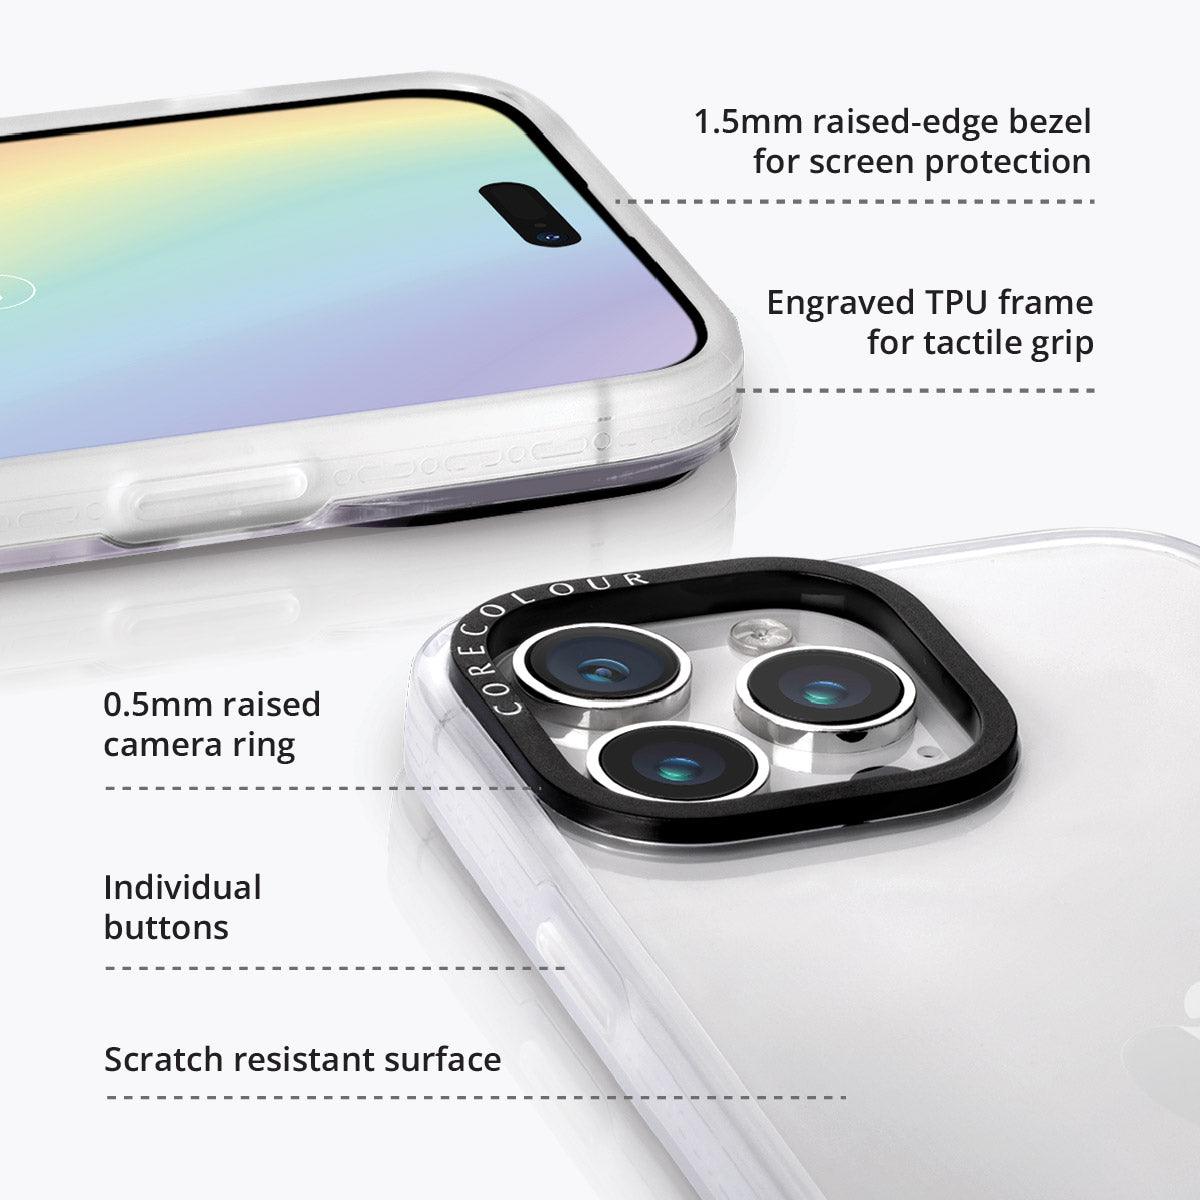 iPhone 12 Luminous Swirl Phone Case 